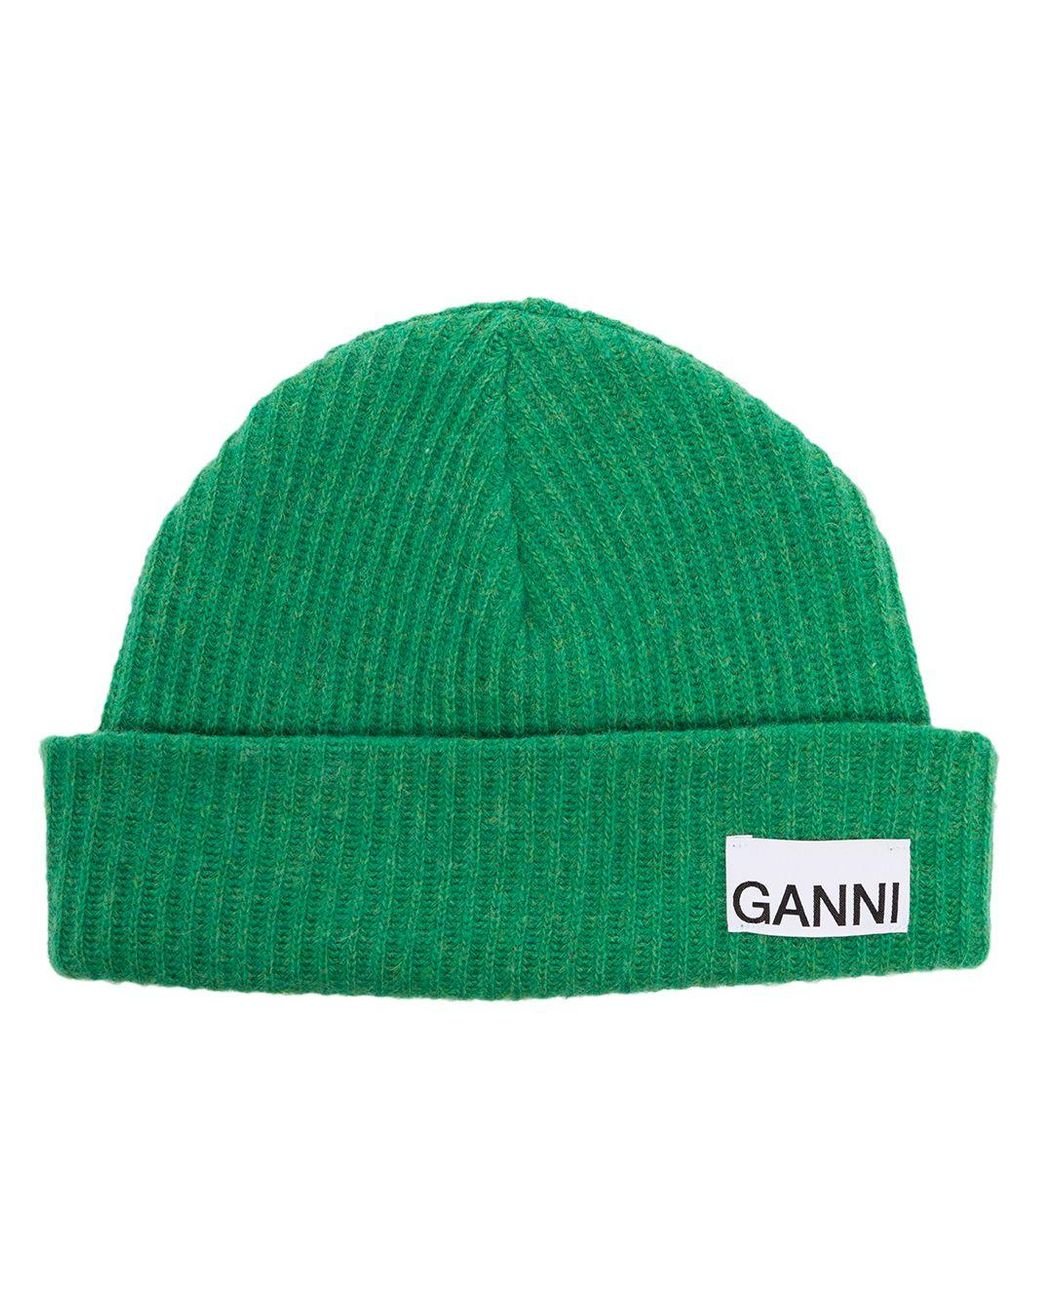 Ganni Ribbed Beanie Hat in Green | Lyst Australia